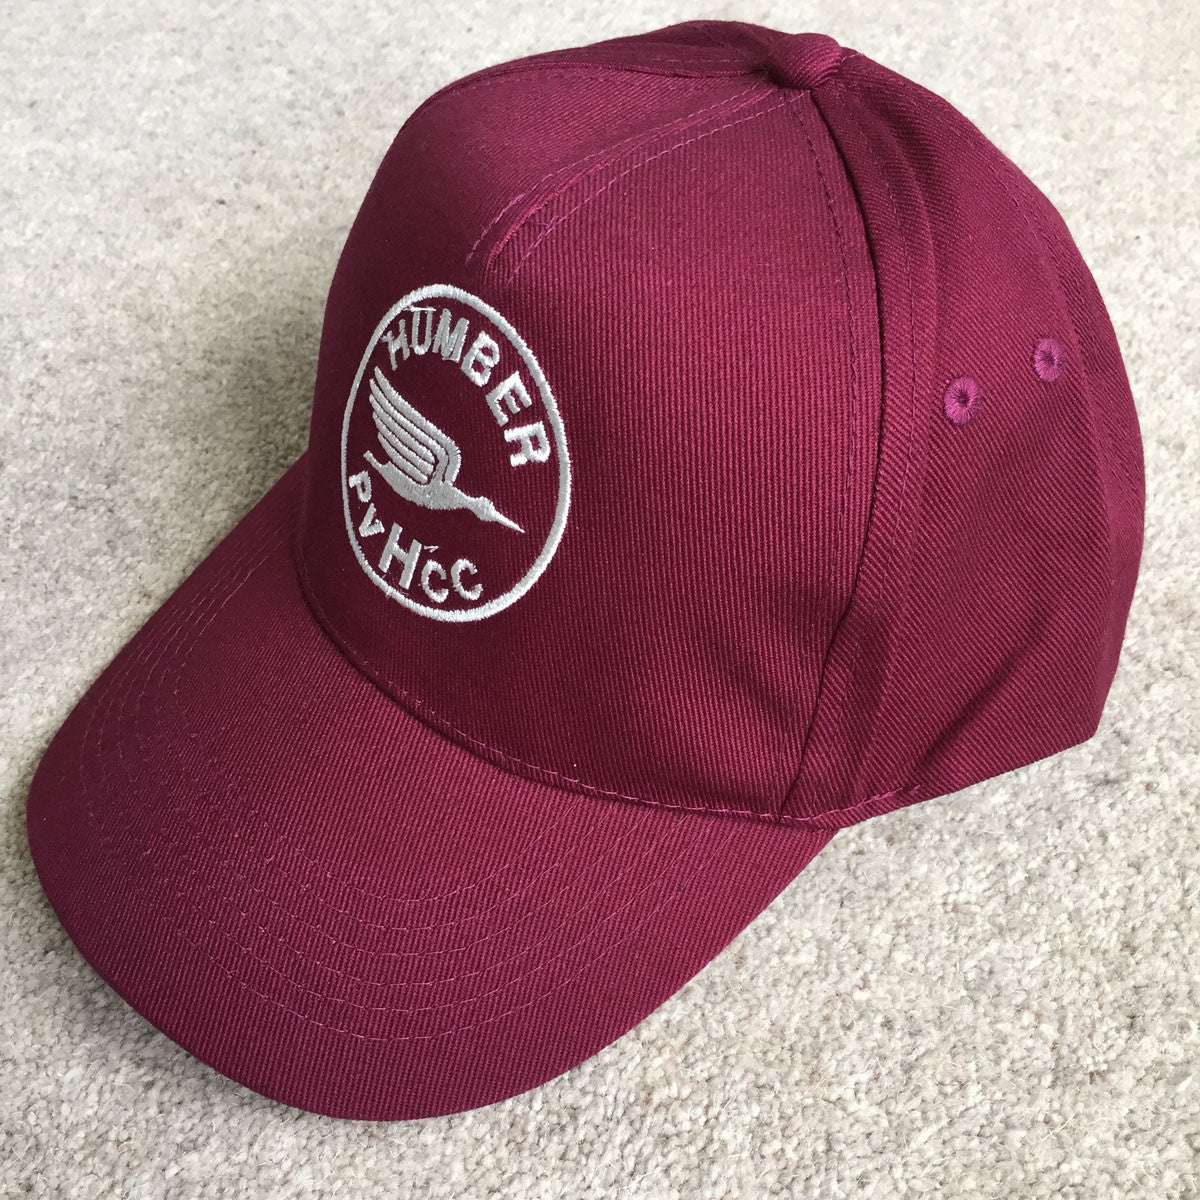 Baseball Cap with Humber PVHCC Club Logo - Maroon